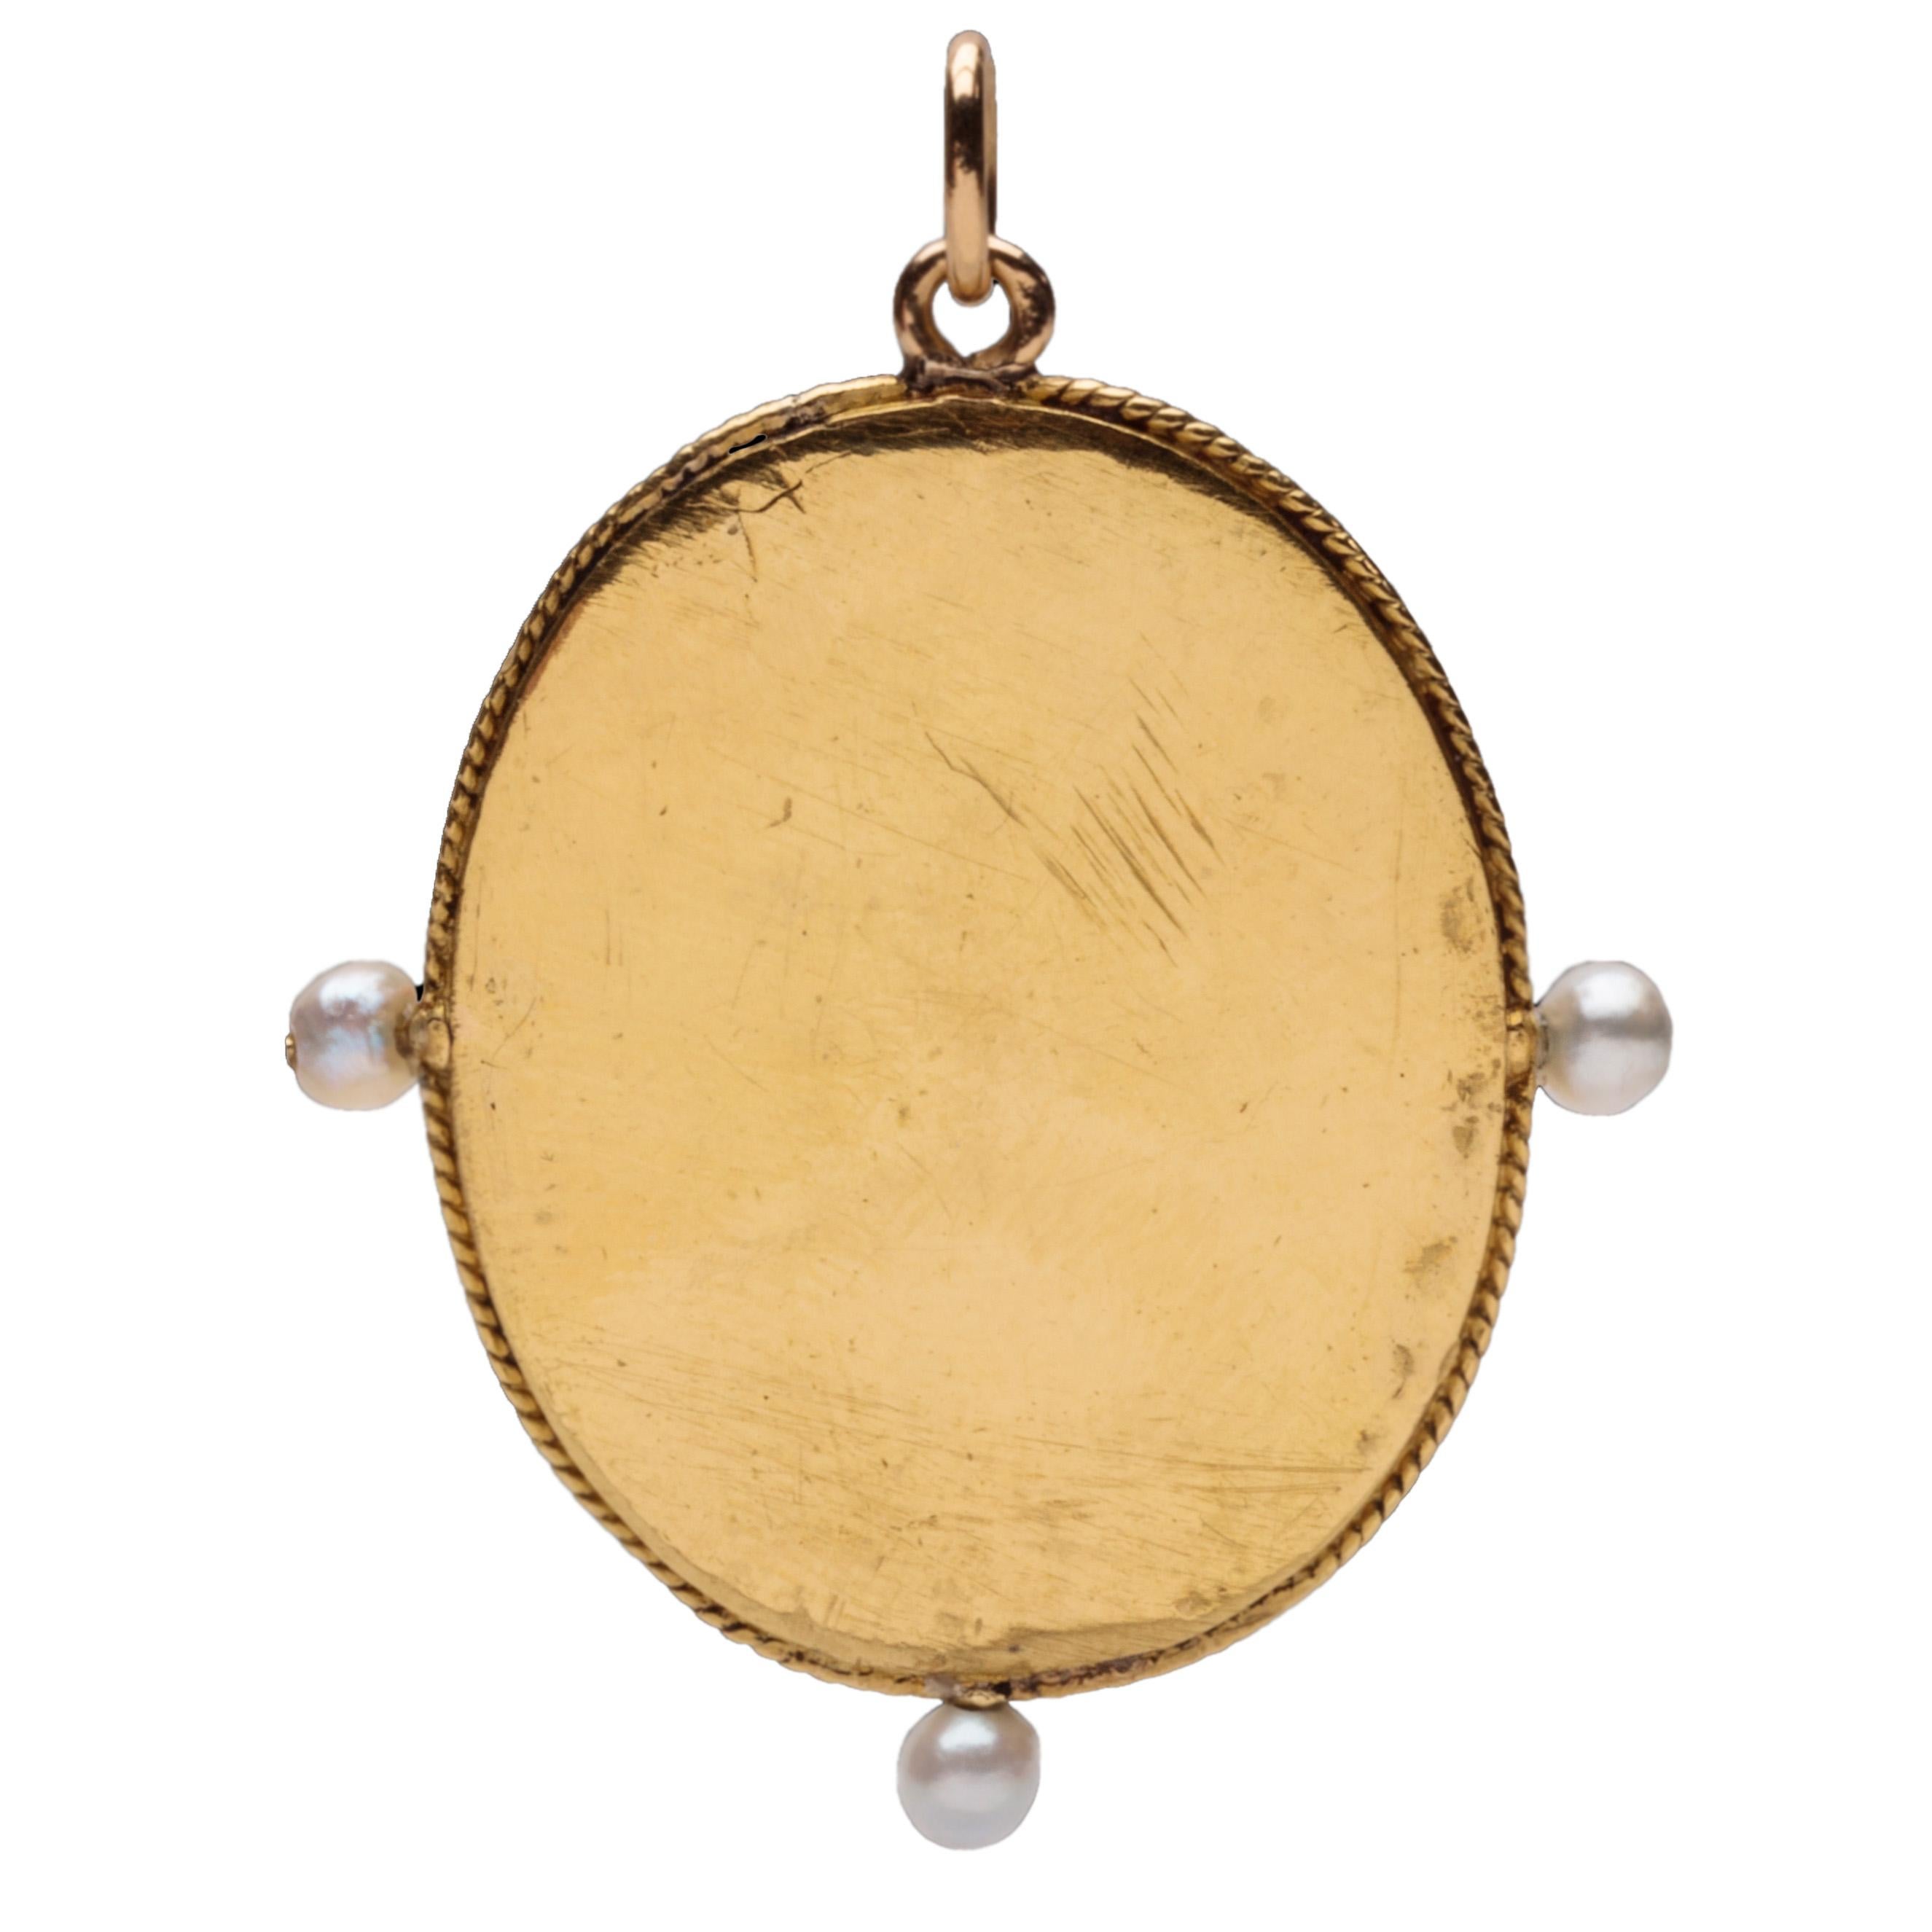 16th century necklace